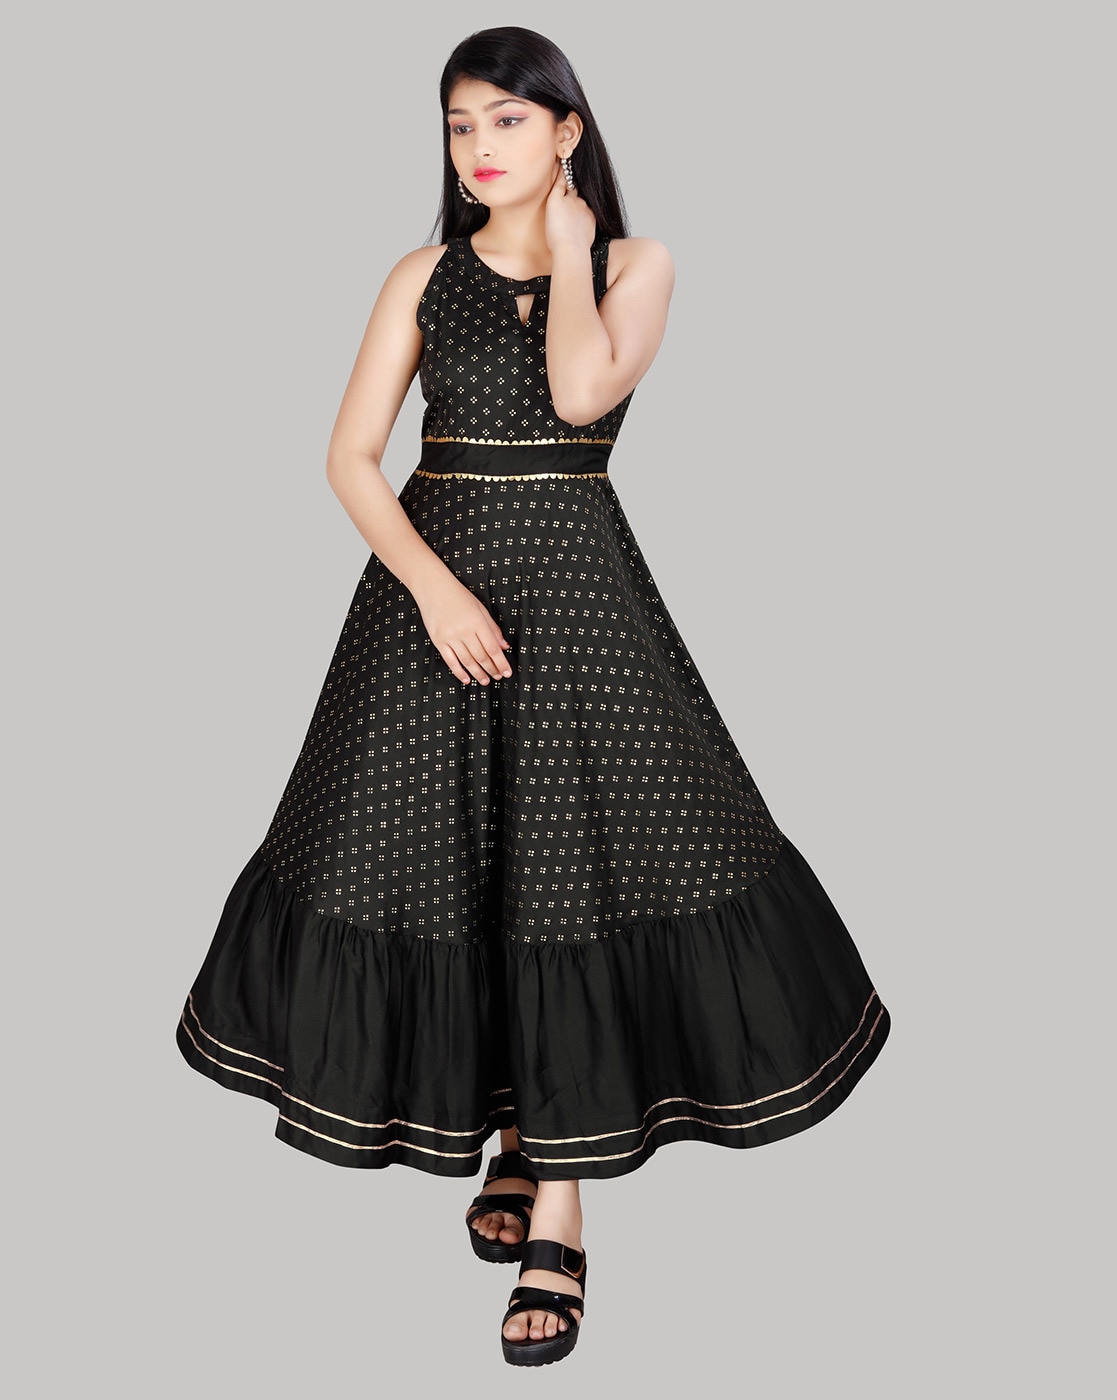 120 Gowns ideas  indian gowns dresses long dress design long gown dress